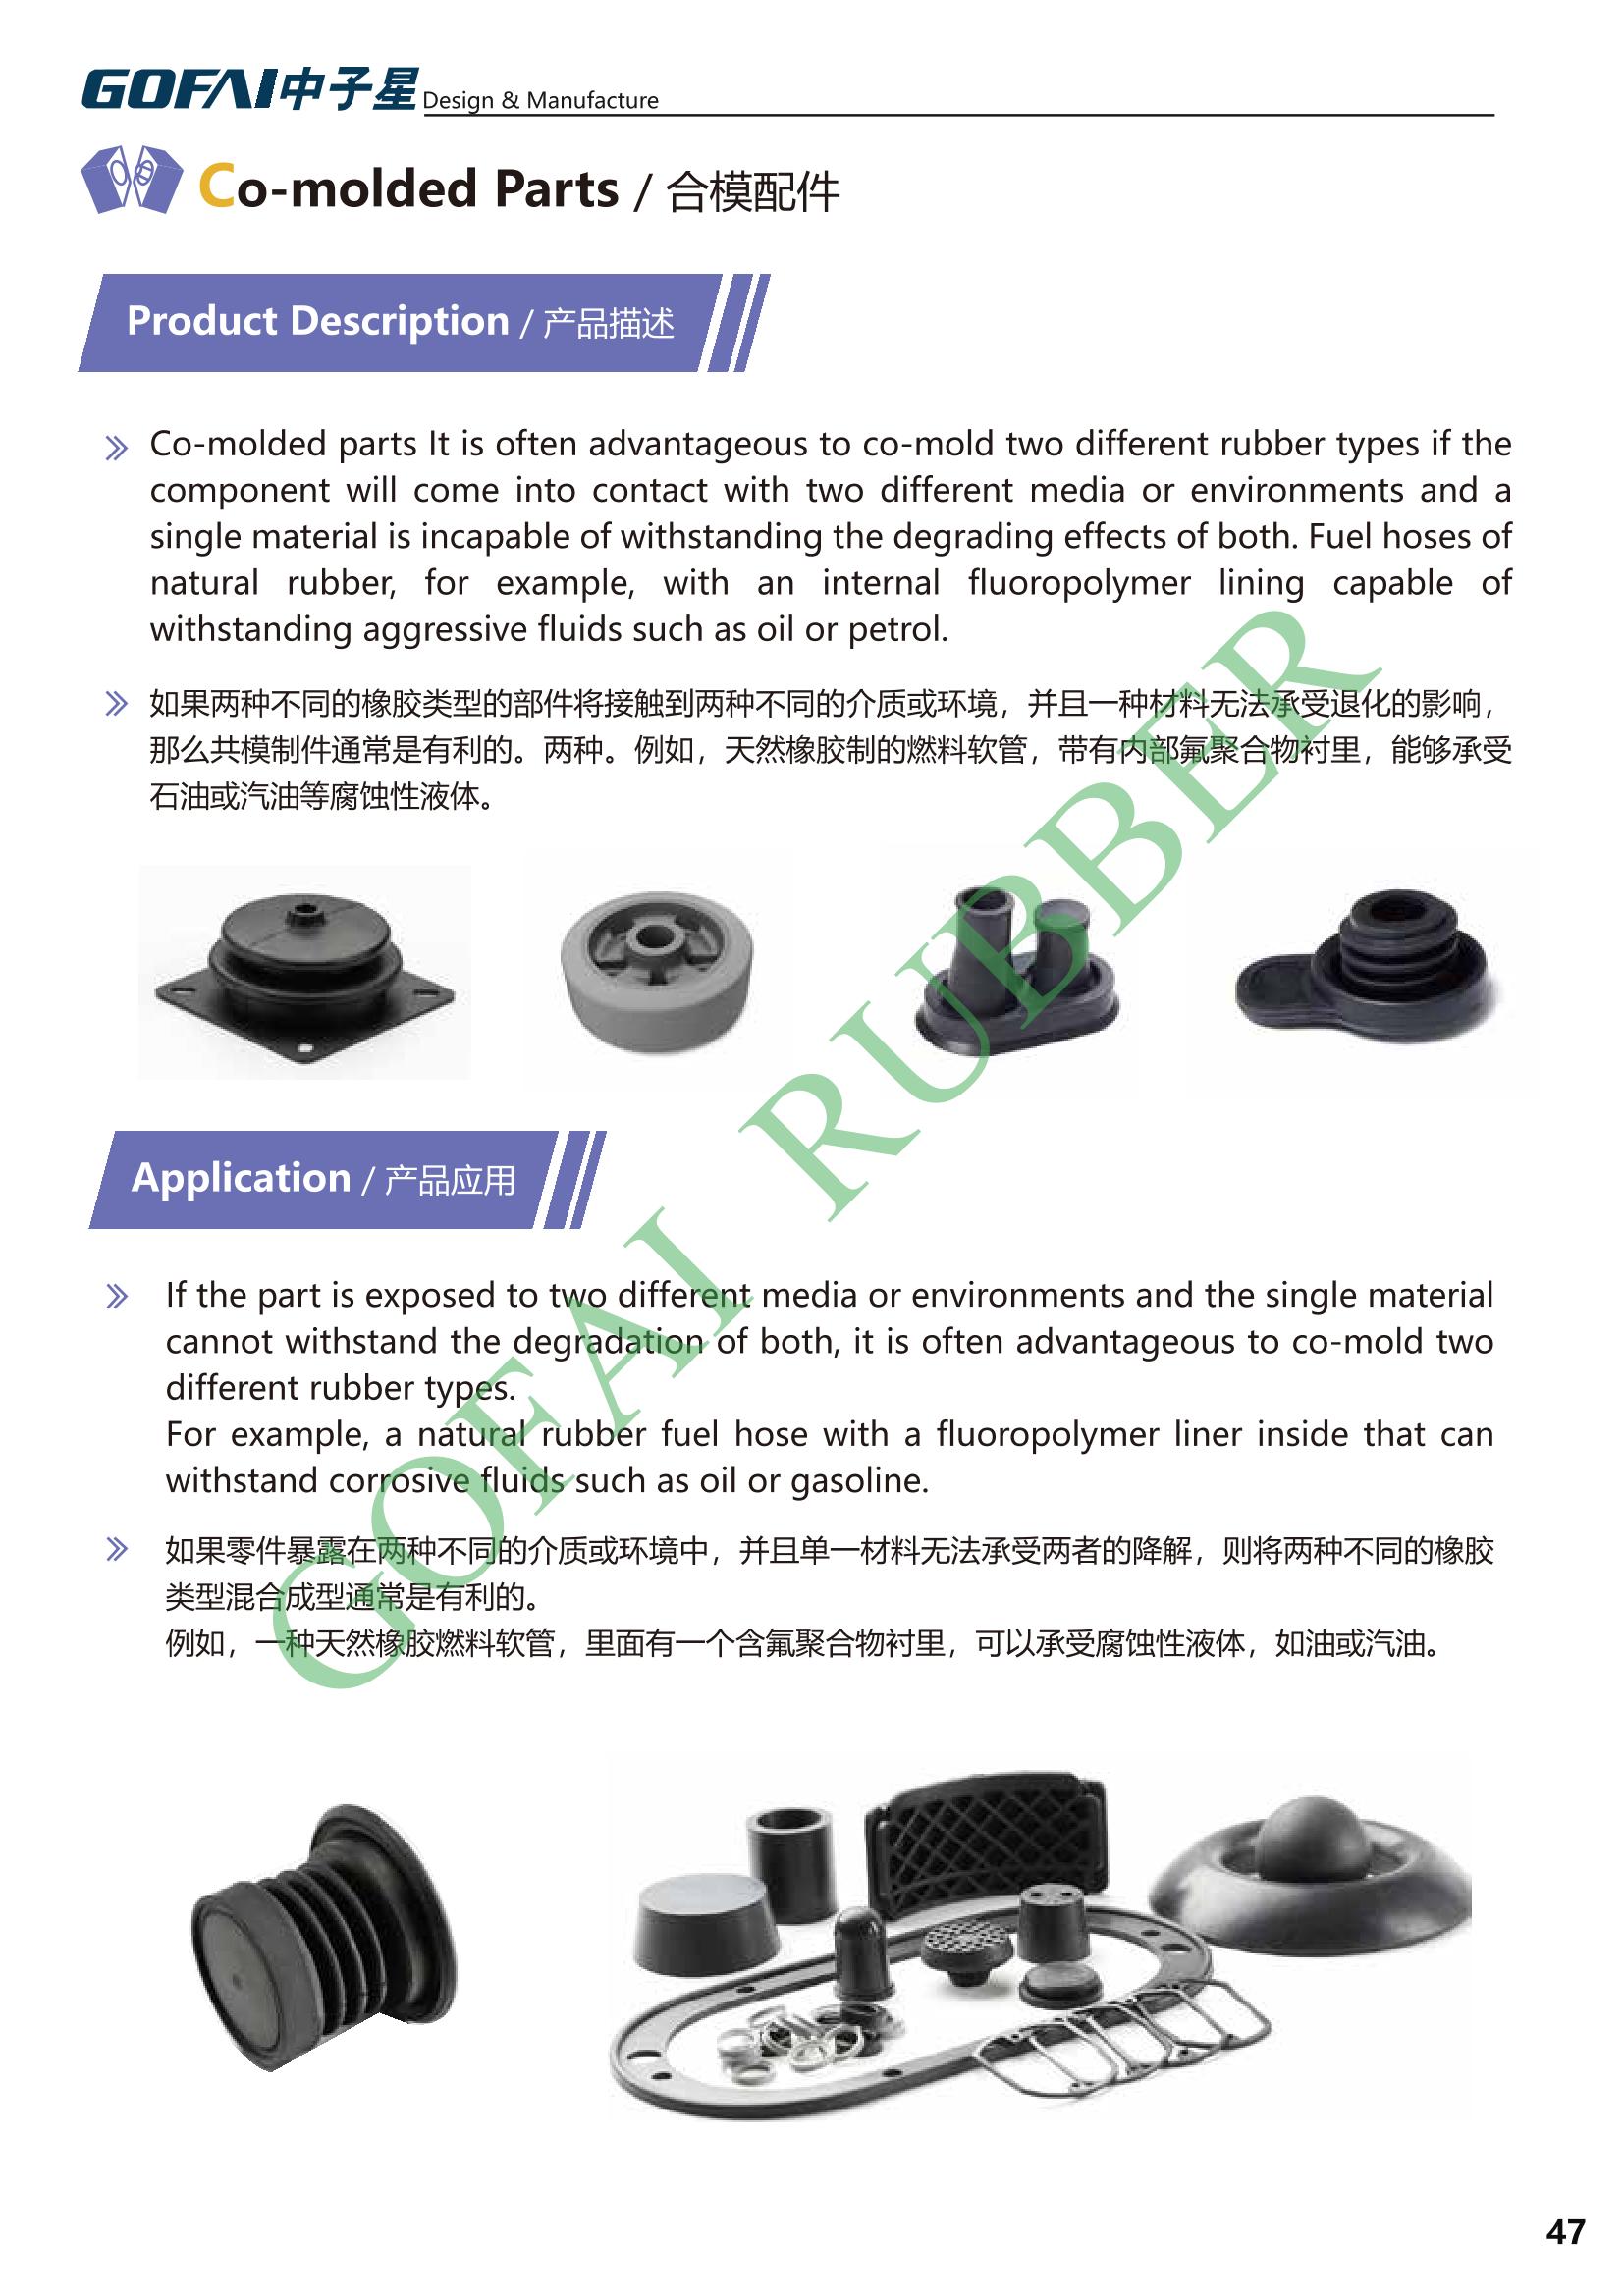 GOFAI rubberplastic products cataloge_47.jpg